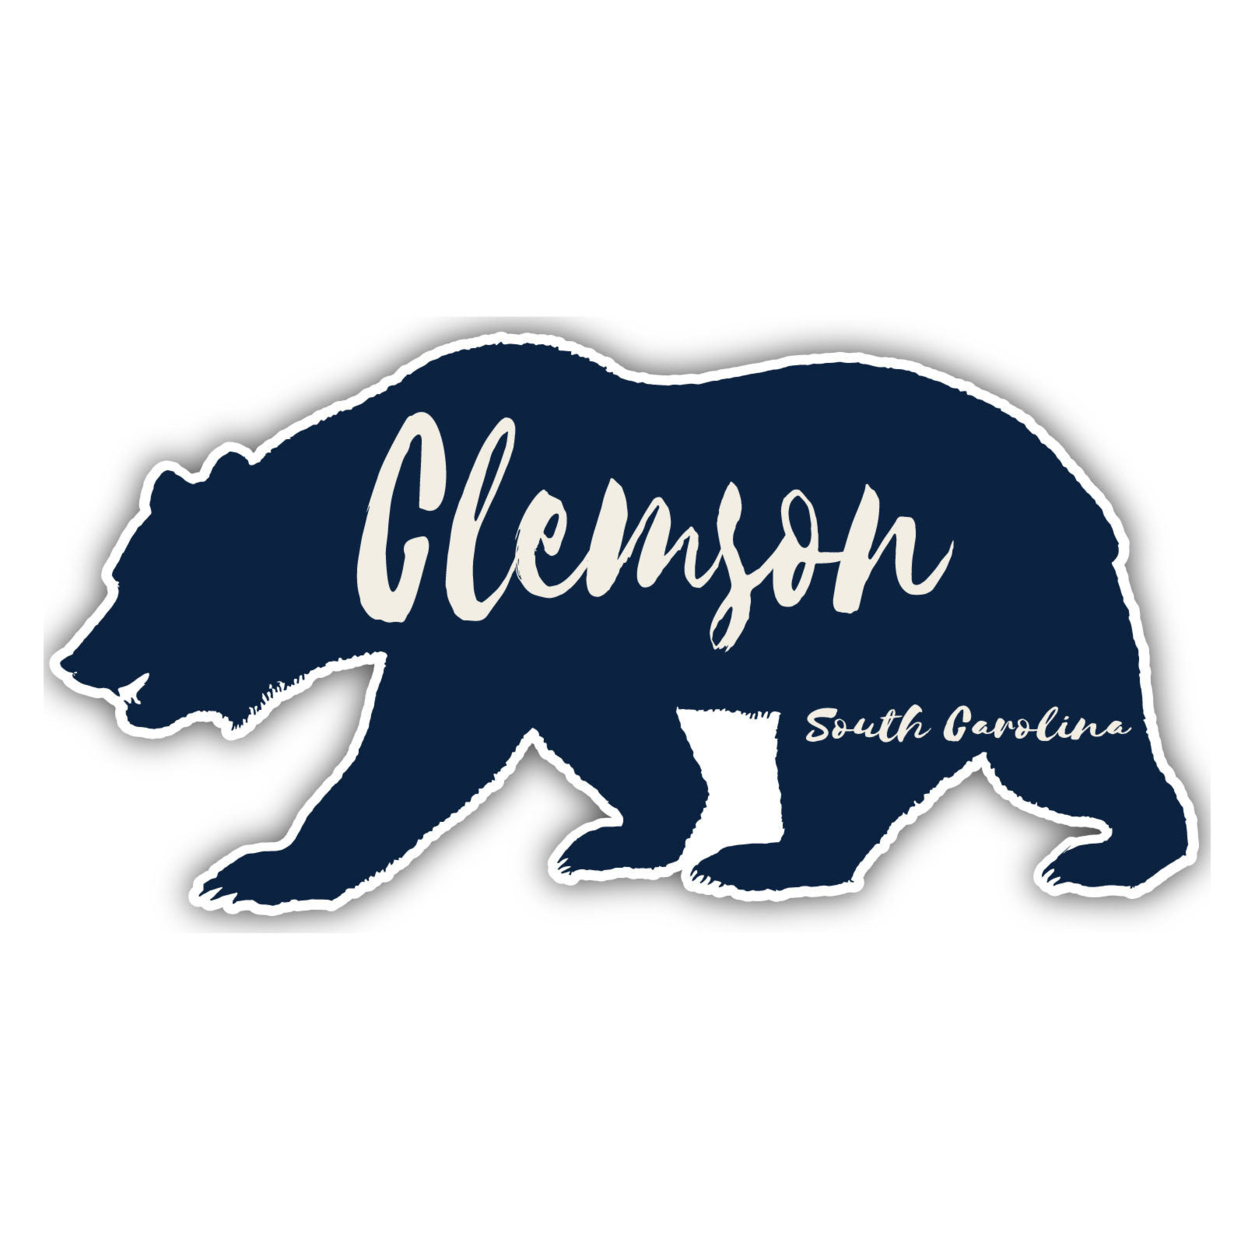 Clemson South Carolina Souvenir Decorative Stickers (Choose Theme And Size) - 4-Pack, 6-Inch, Tent